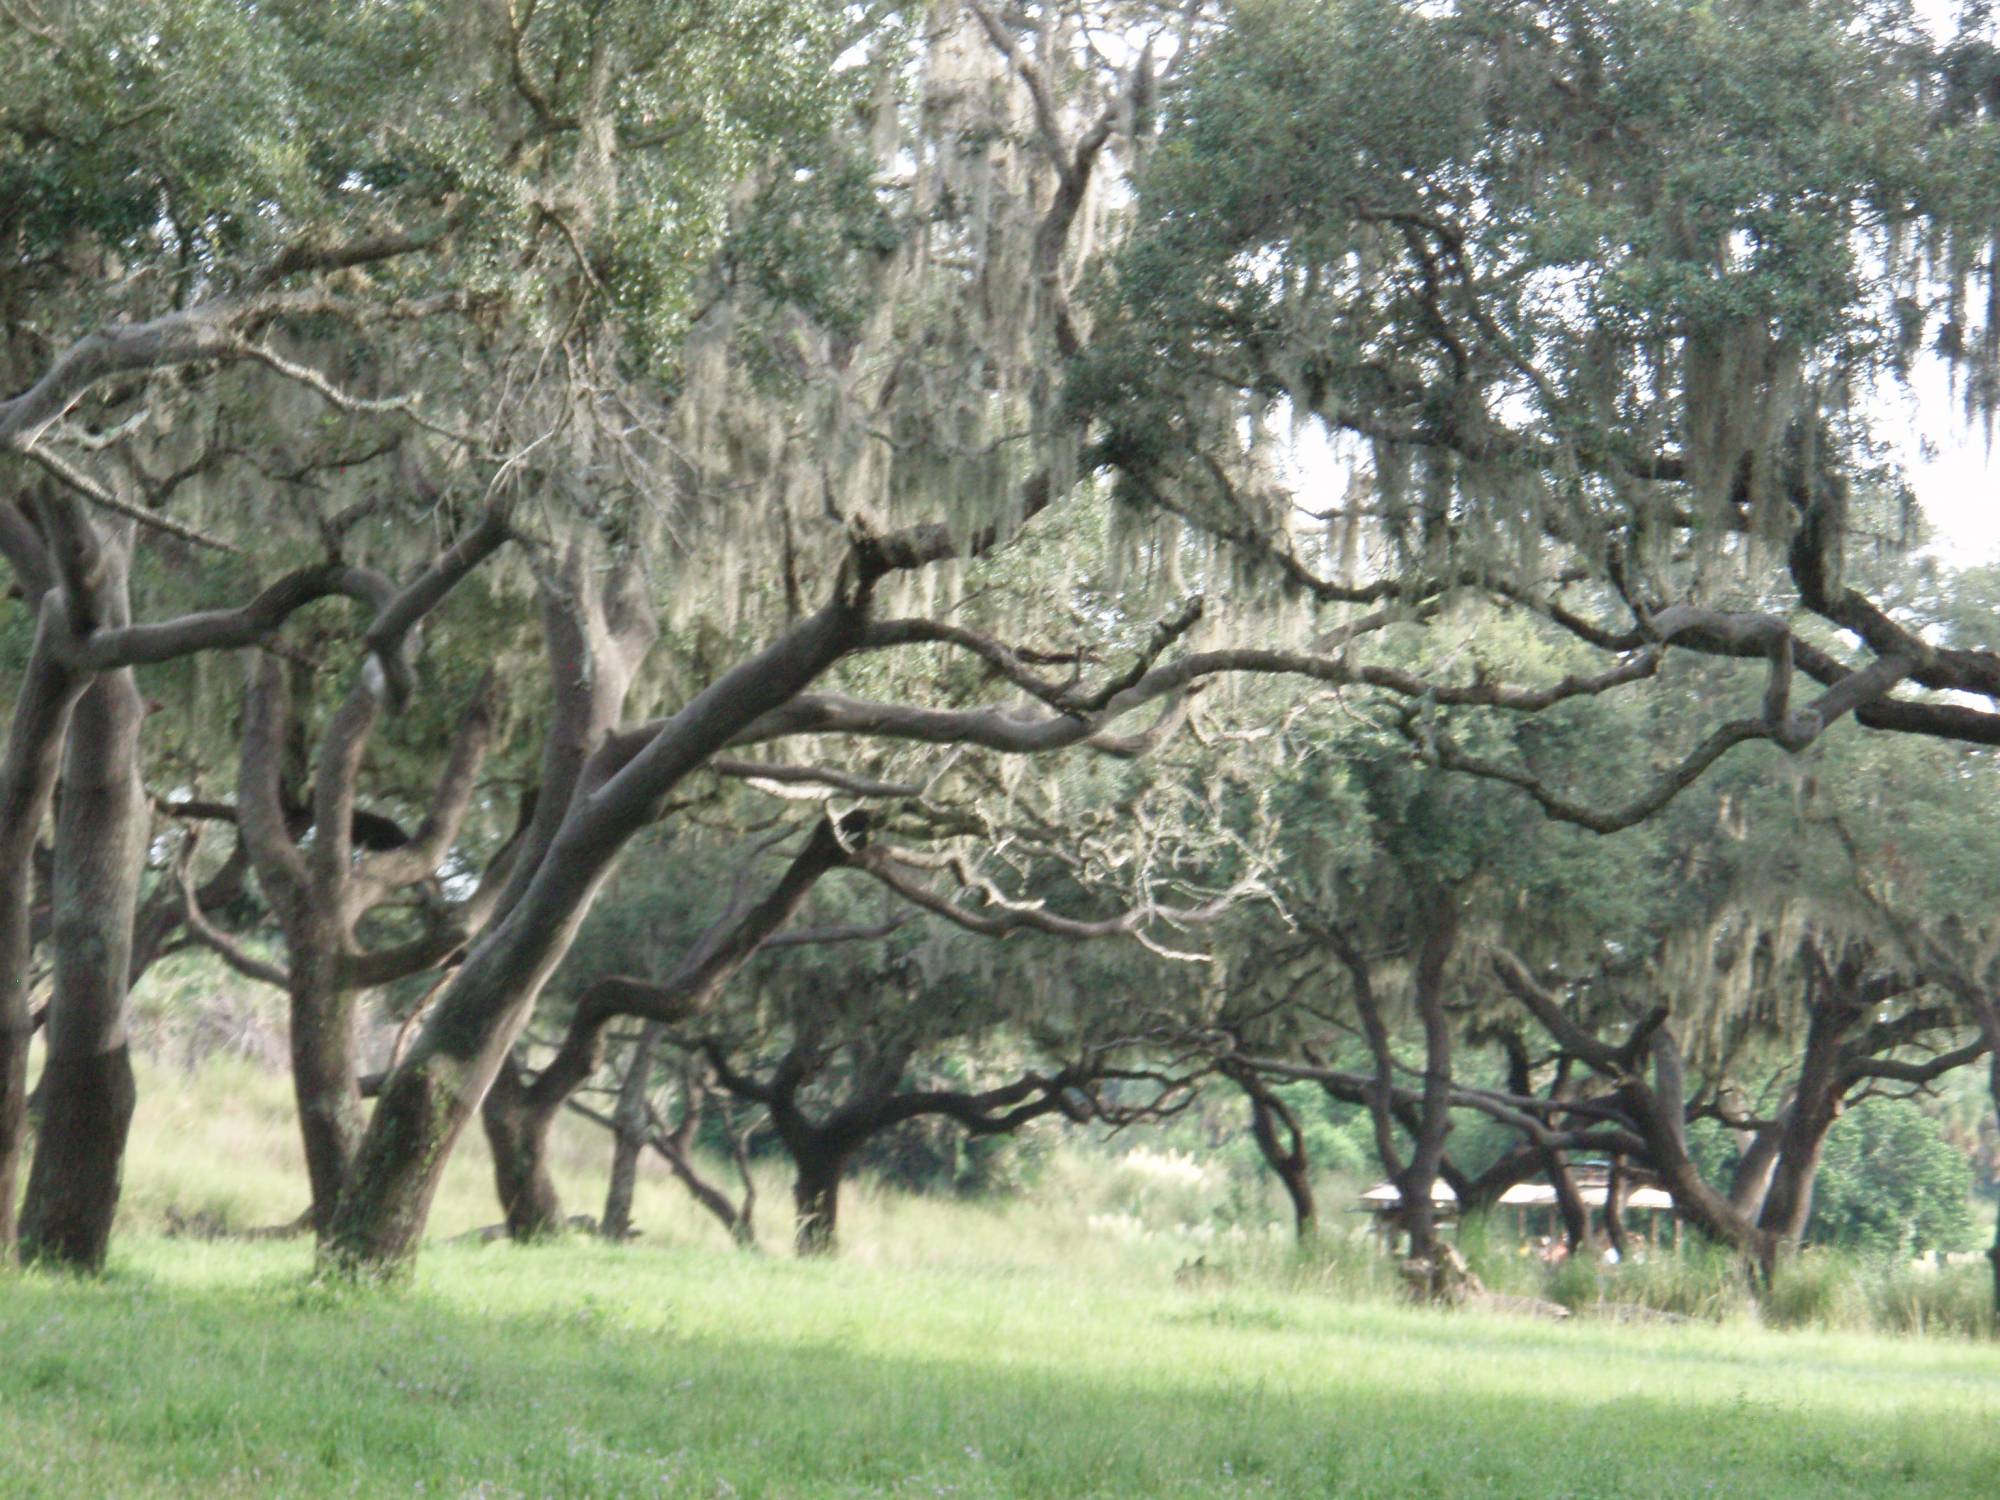 Savannah Trees on Kilamanjaro Safari